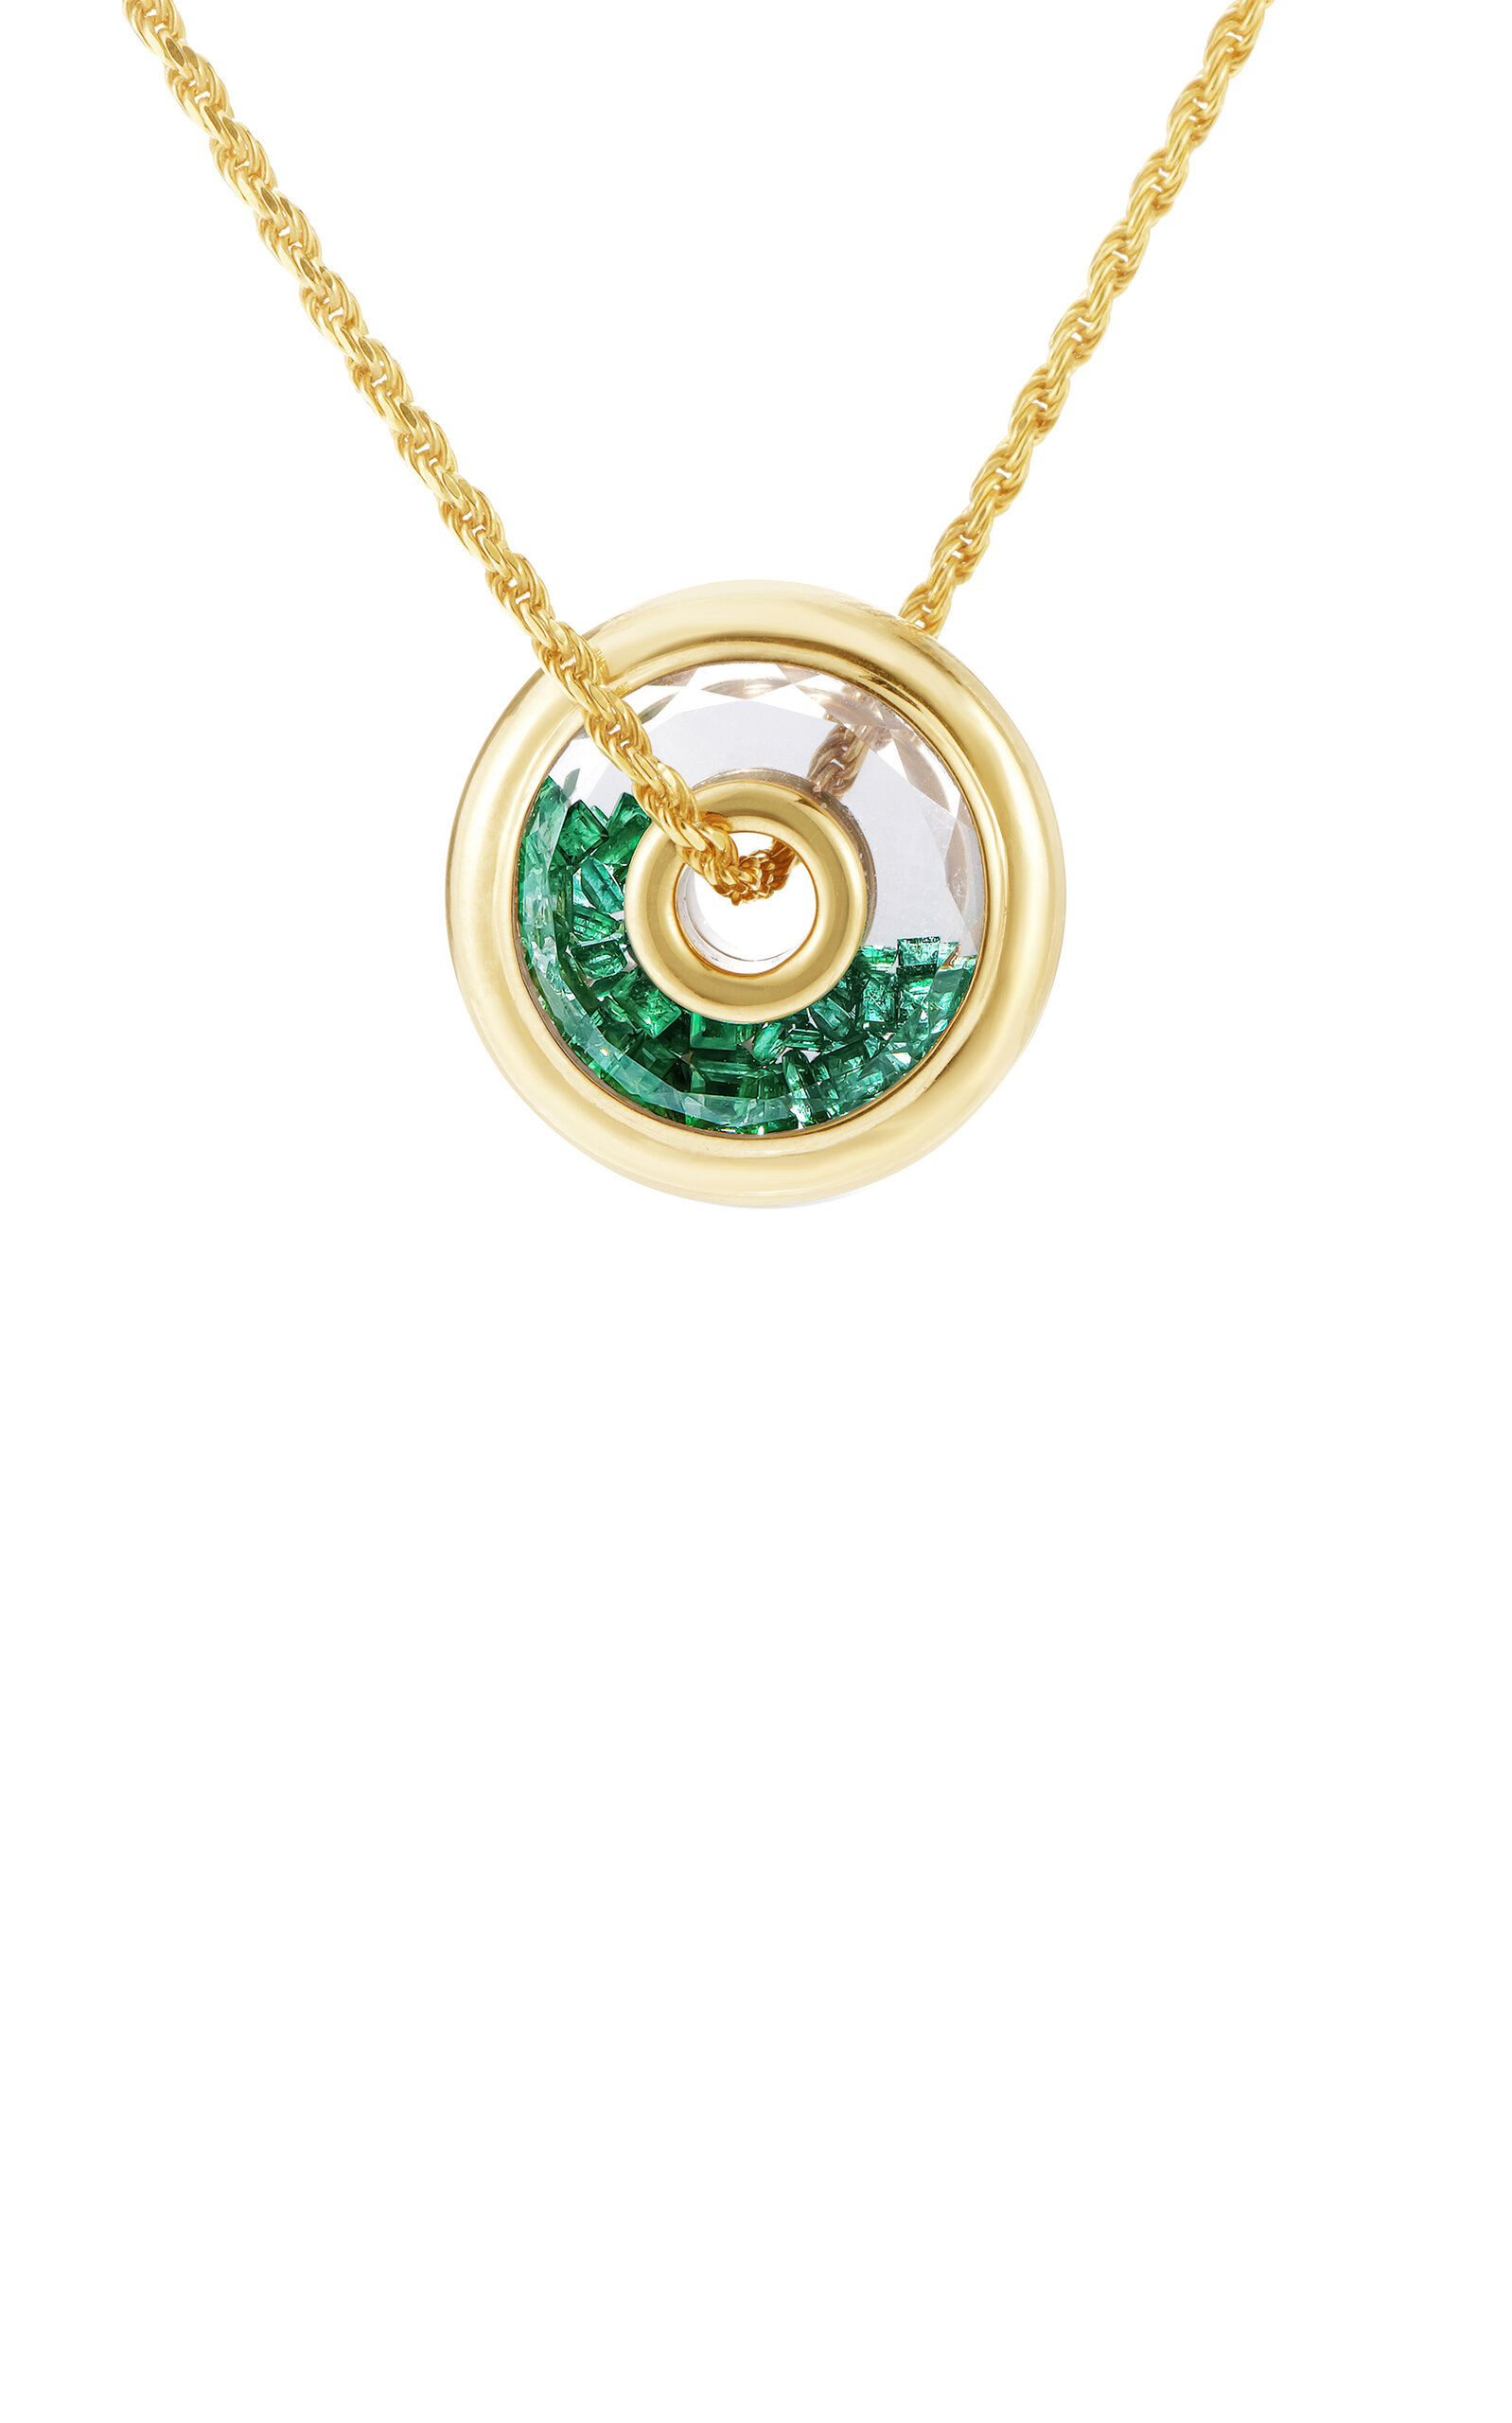 Moritz Glik 18k Yellow Gold Roda 15 Pendant Necklace With Emeralds In Yg